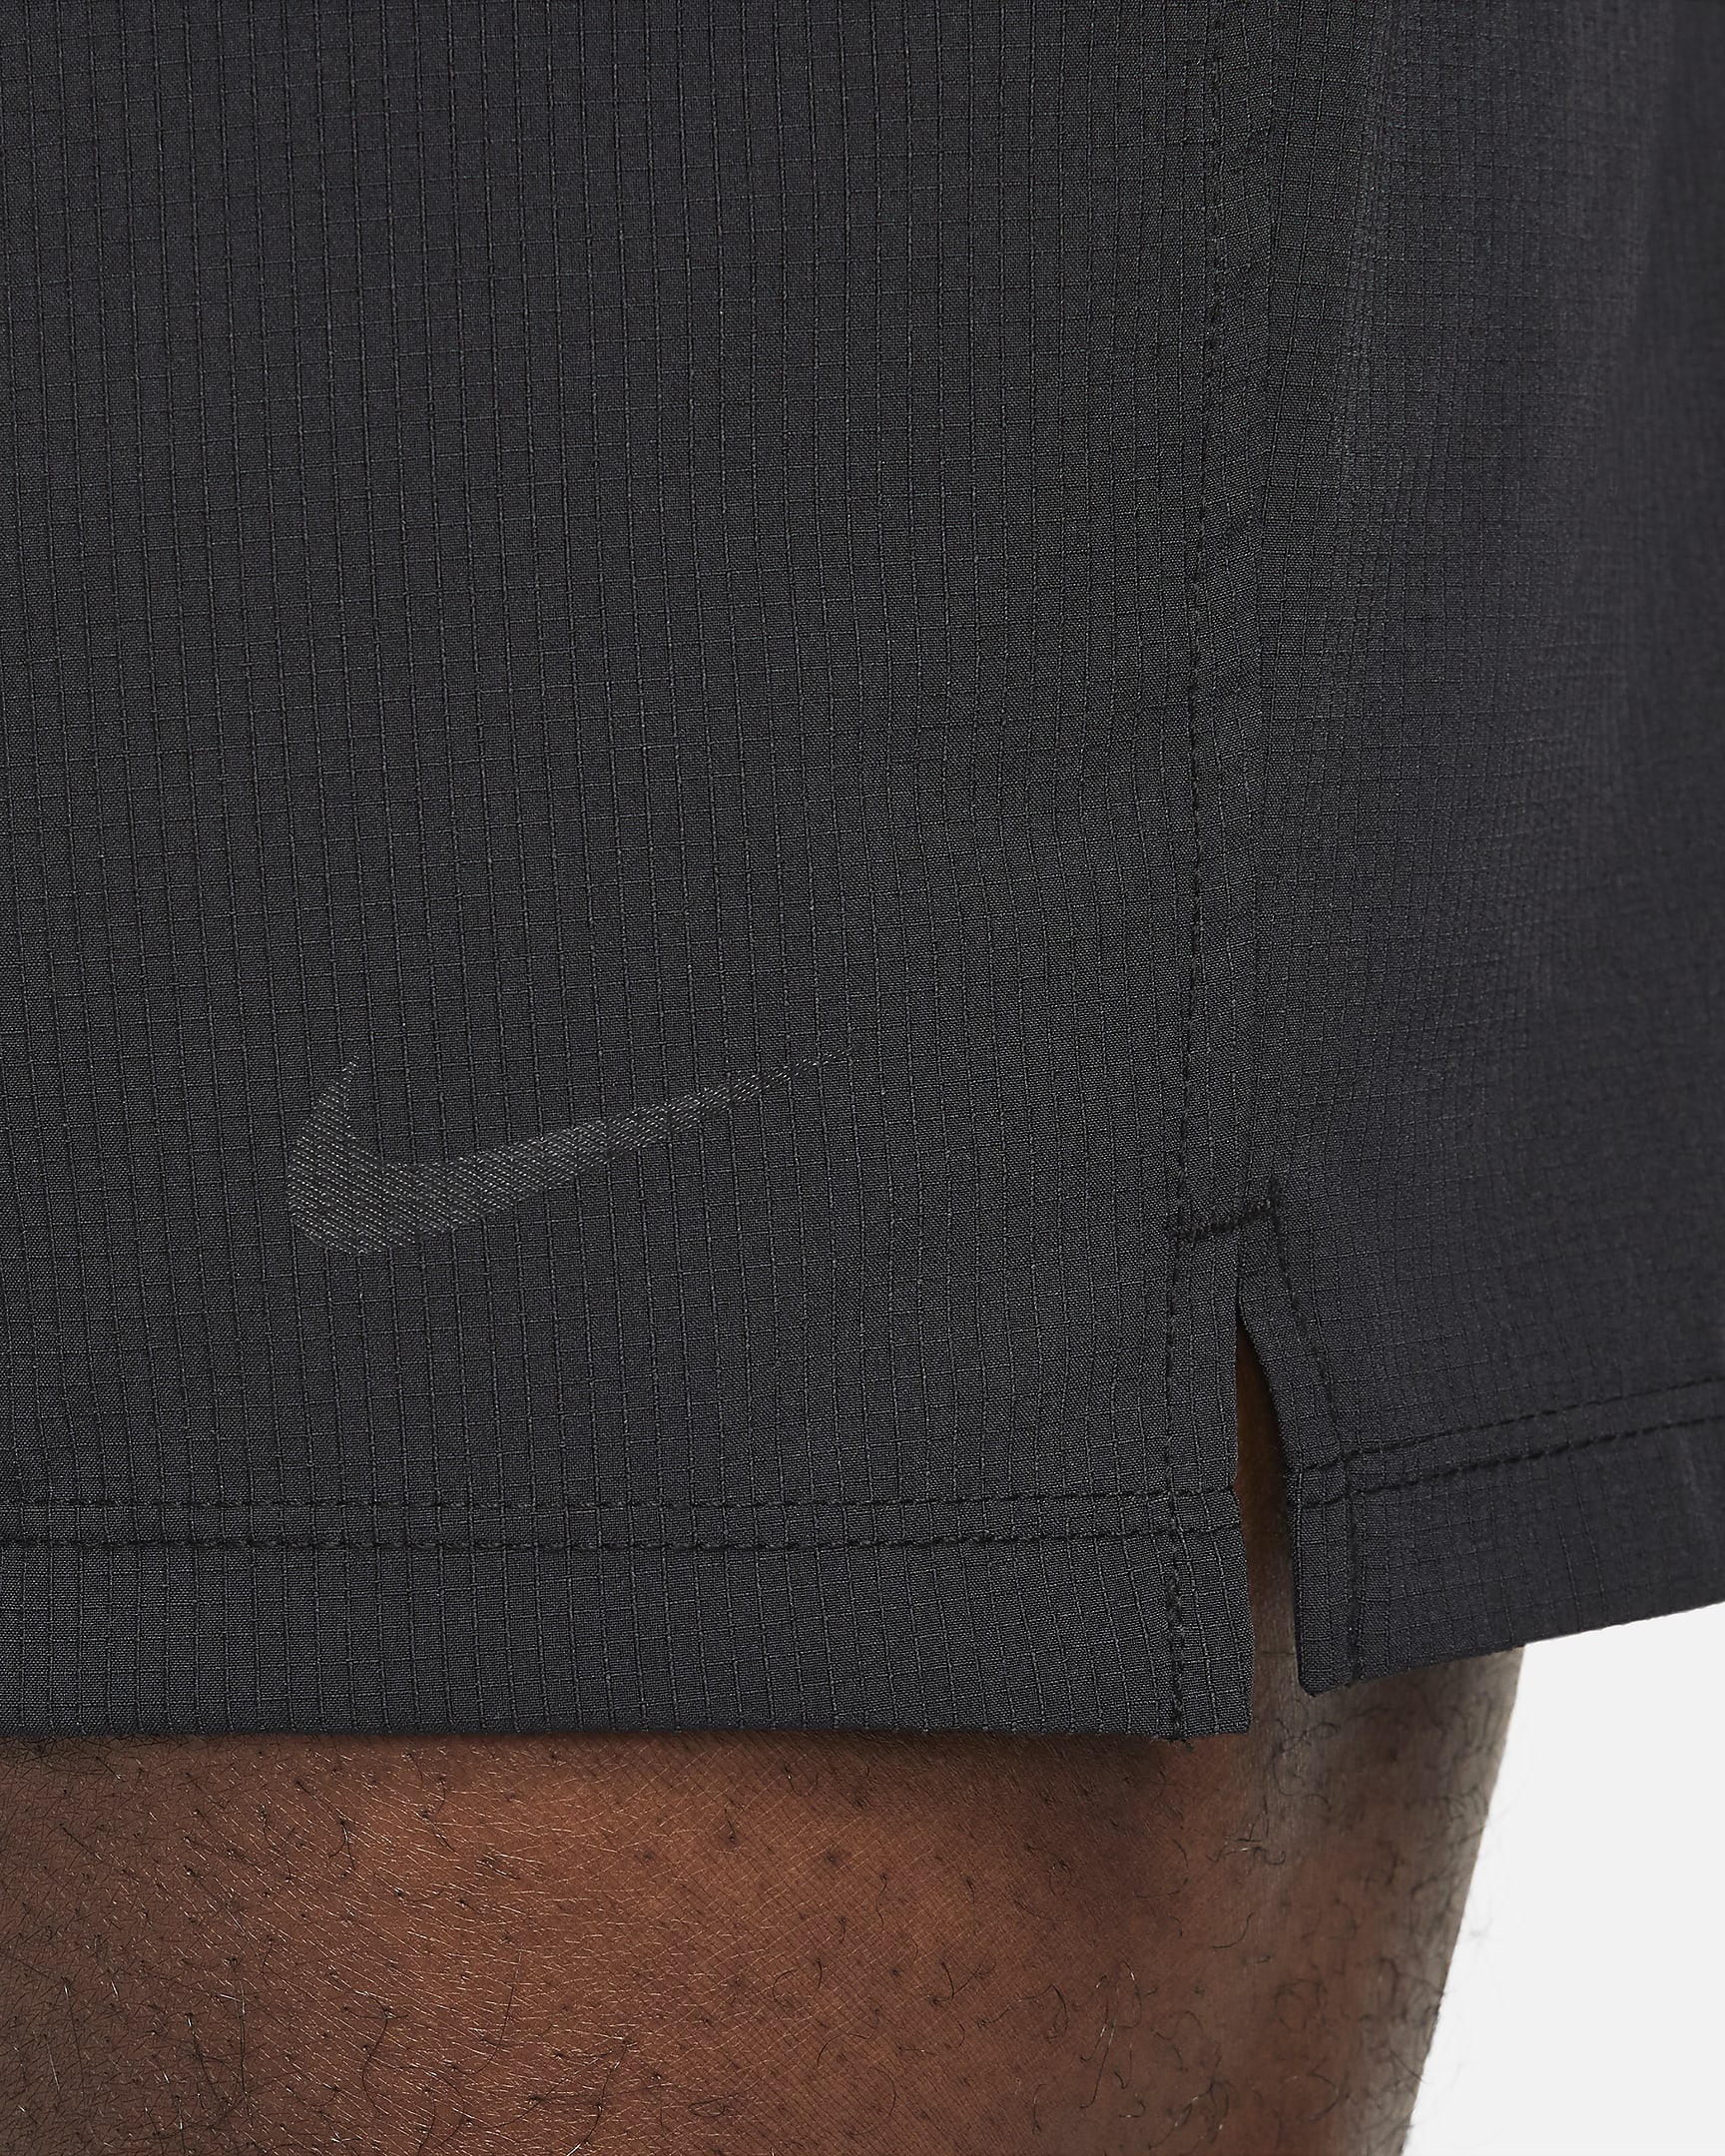 Nike Flex Rep 4.0 Men's Dri-FIT 18cm (approx.) Unlined Fitness Shorts ...